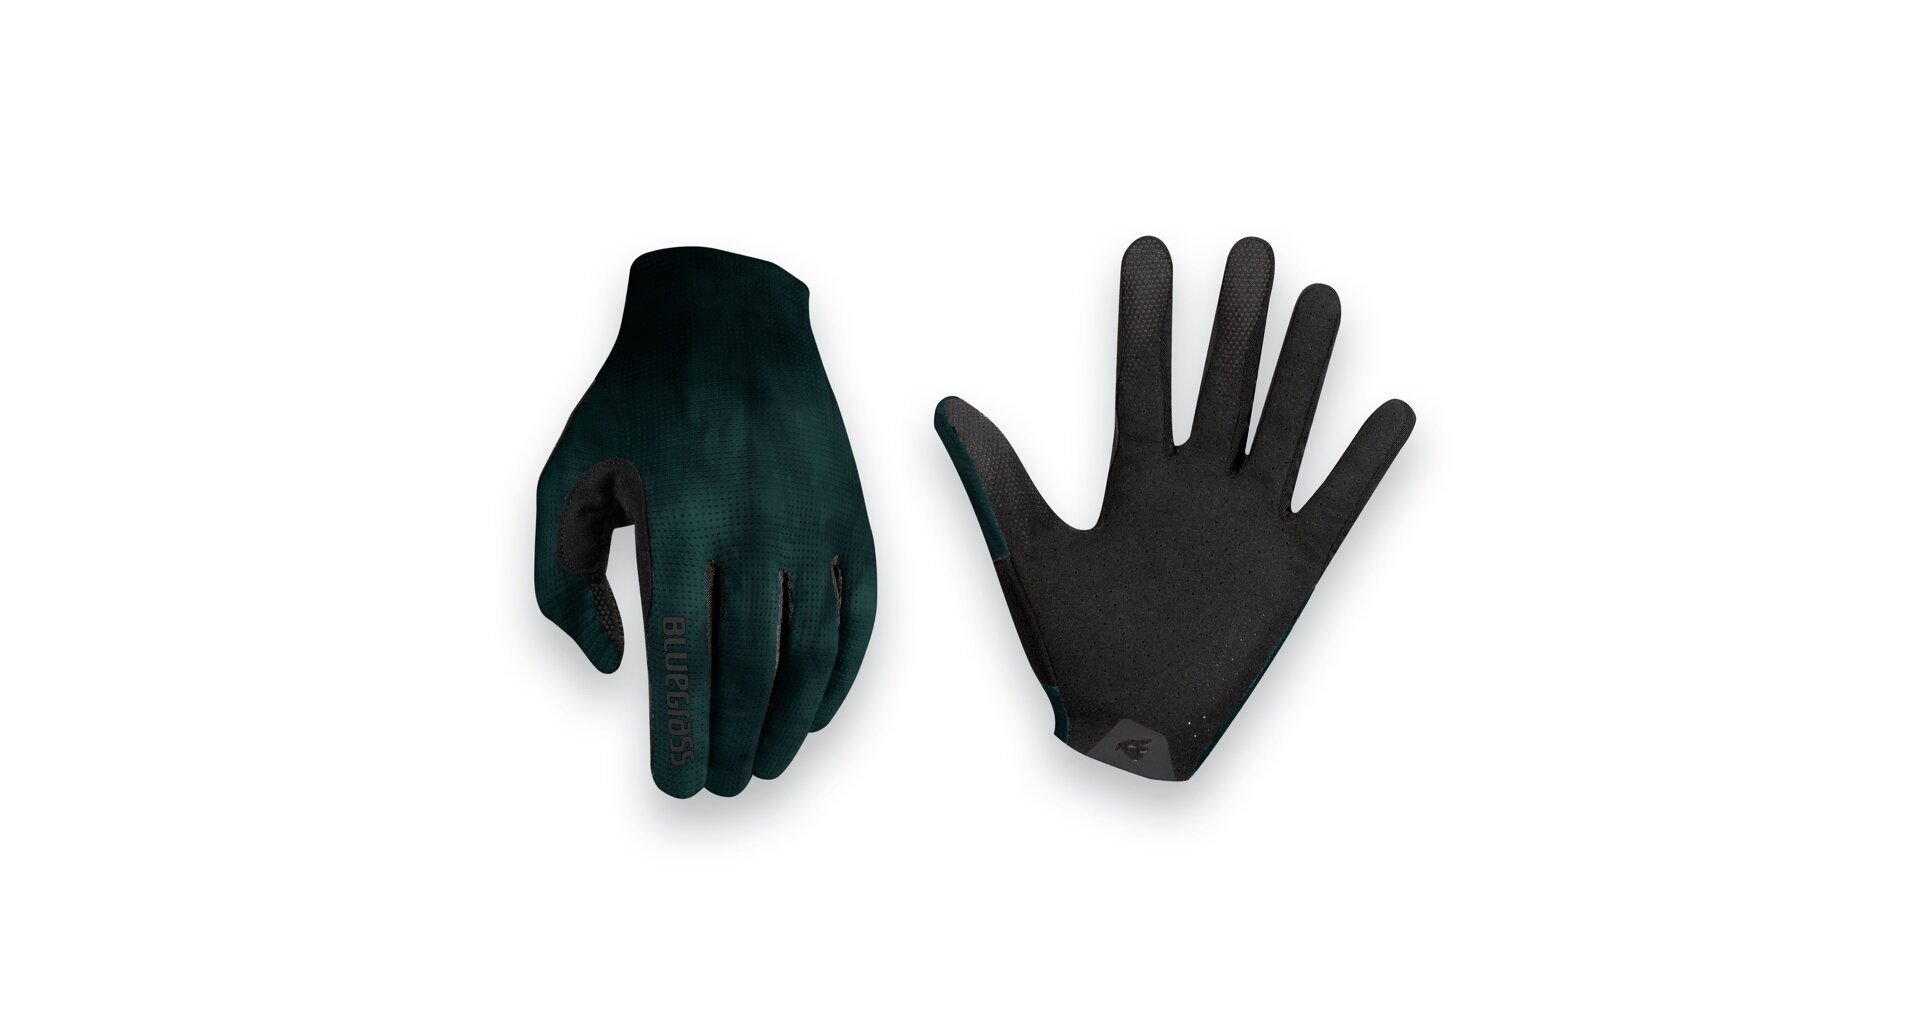 BLUEGRASS rukavice VAPOR LITE zelená Velikost: L